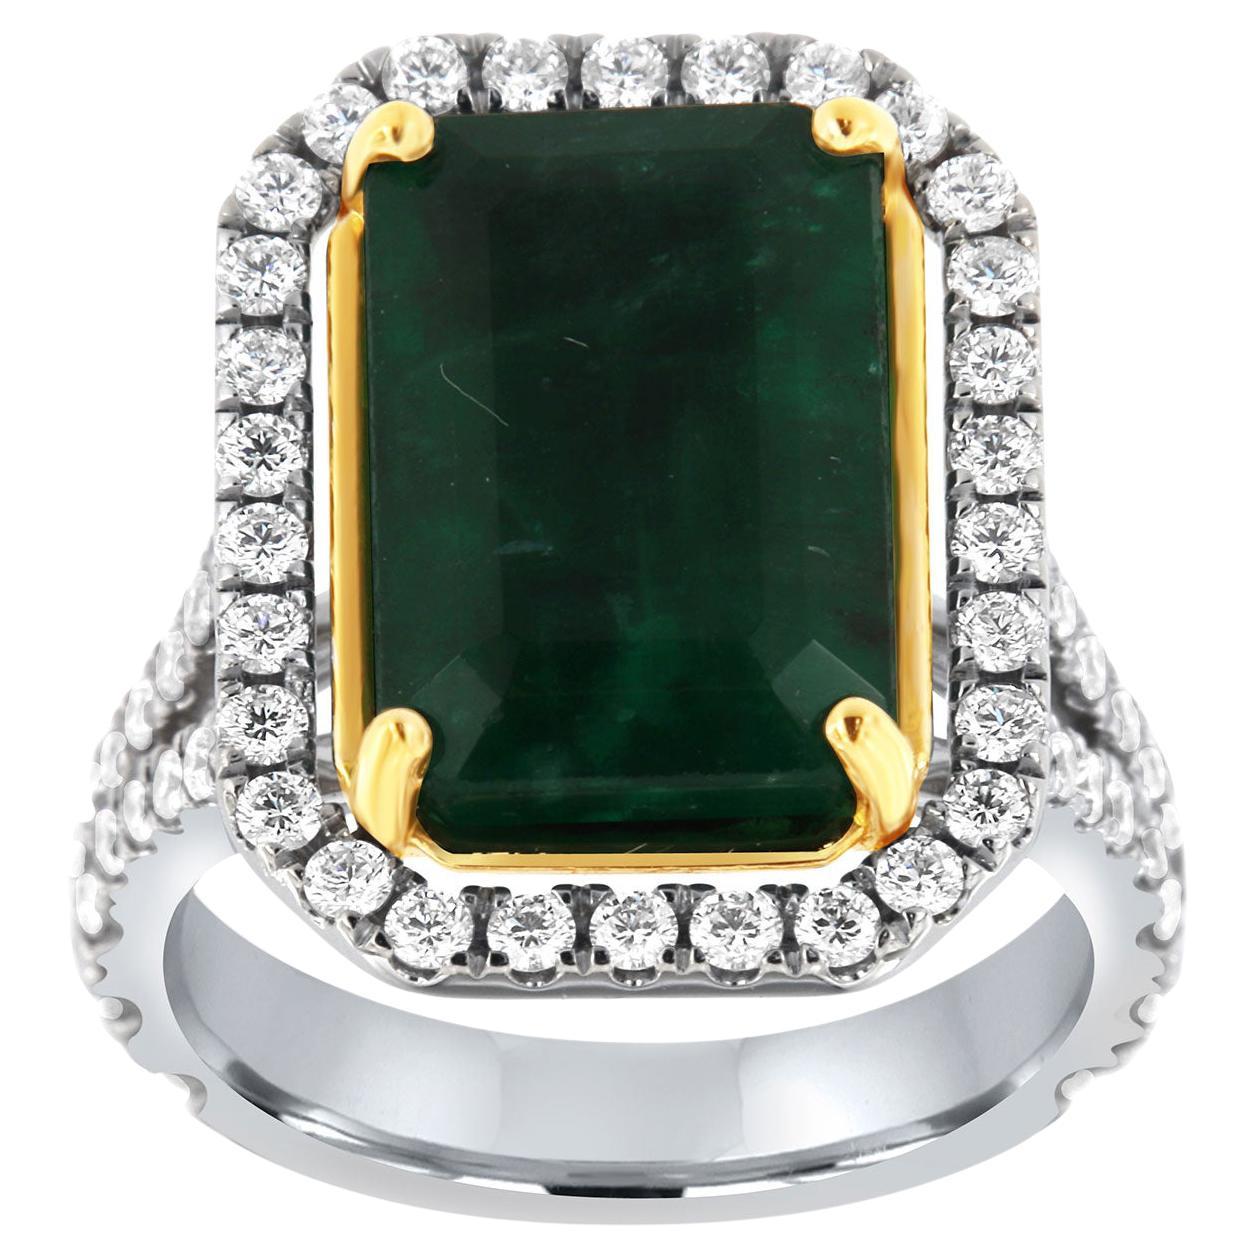 18K White & Yellow Gold GIA Certified 8.17 Carat Green Emerald Halo Diamond Ring